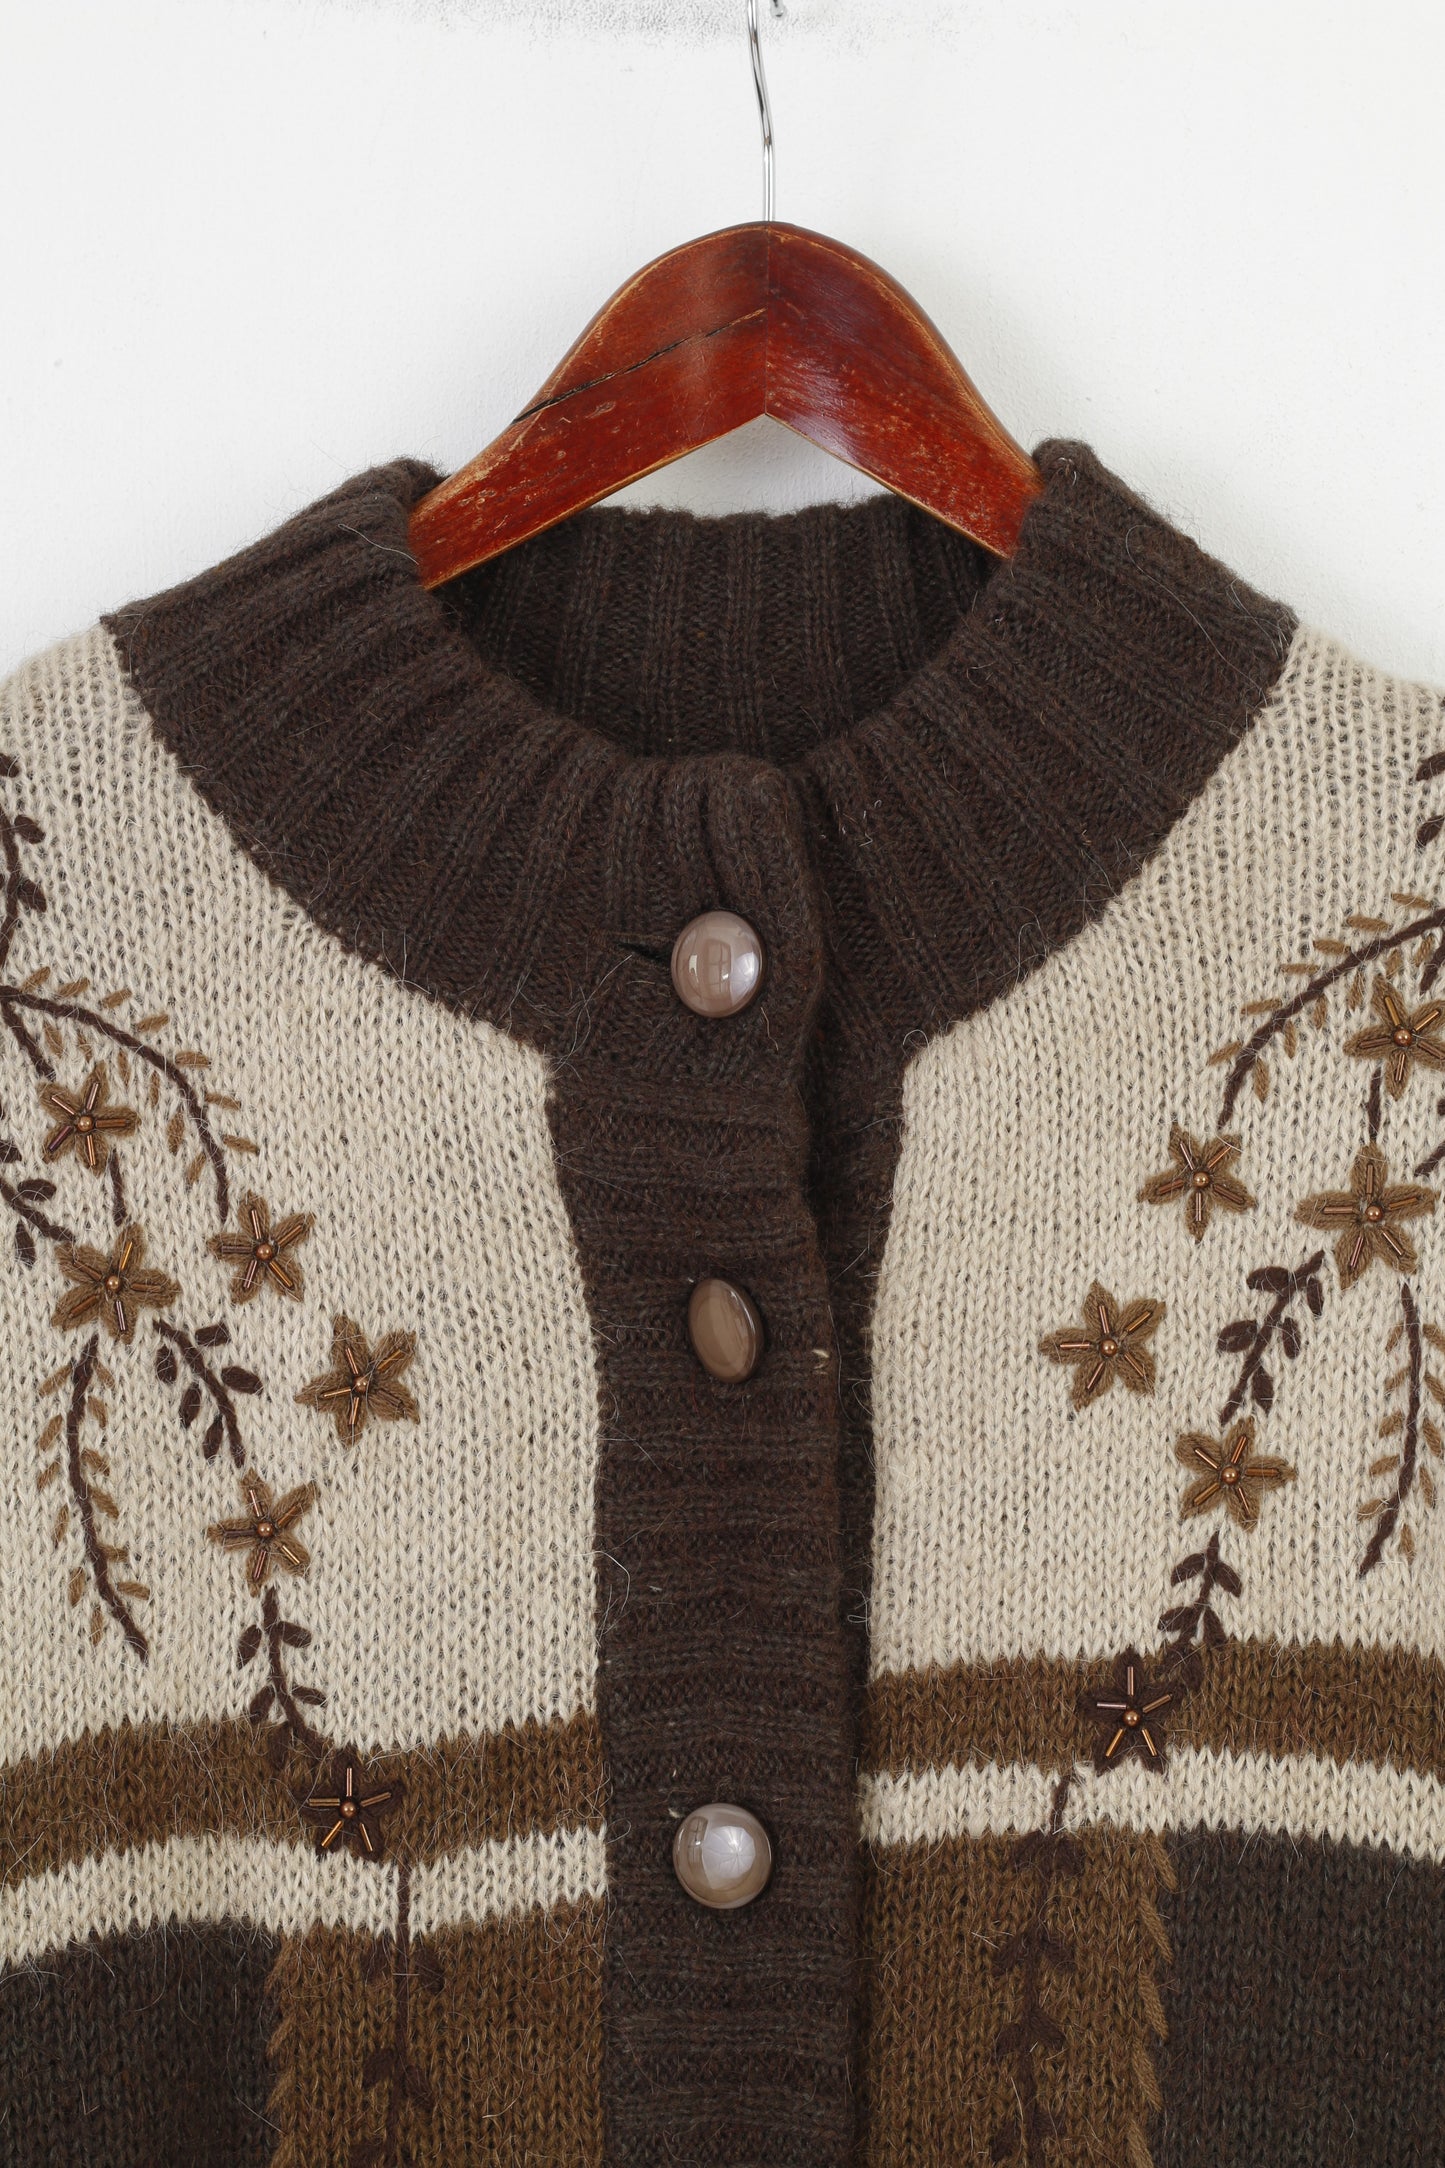 Affections Woman M/L Jumper Khaki Flower Wool Bottoms Shoulder Pads Vintage Sweater Classic Top